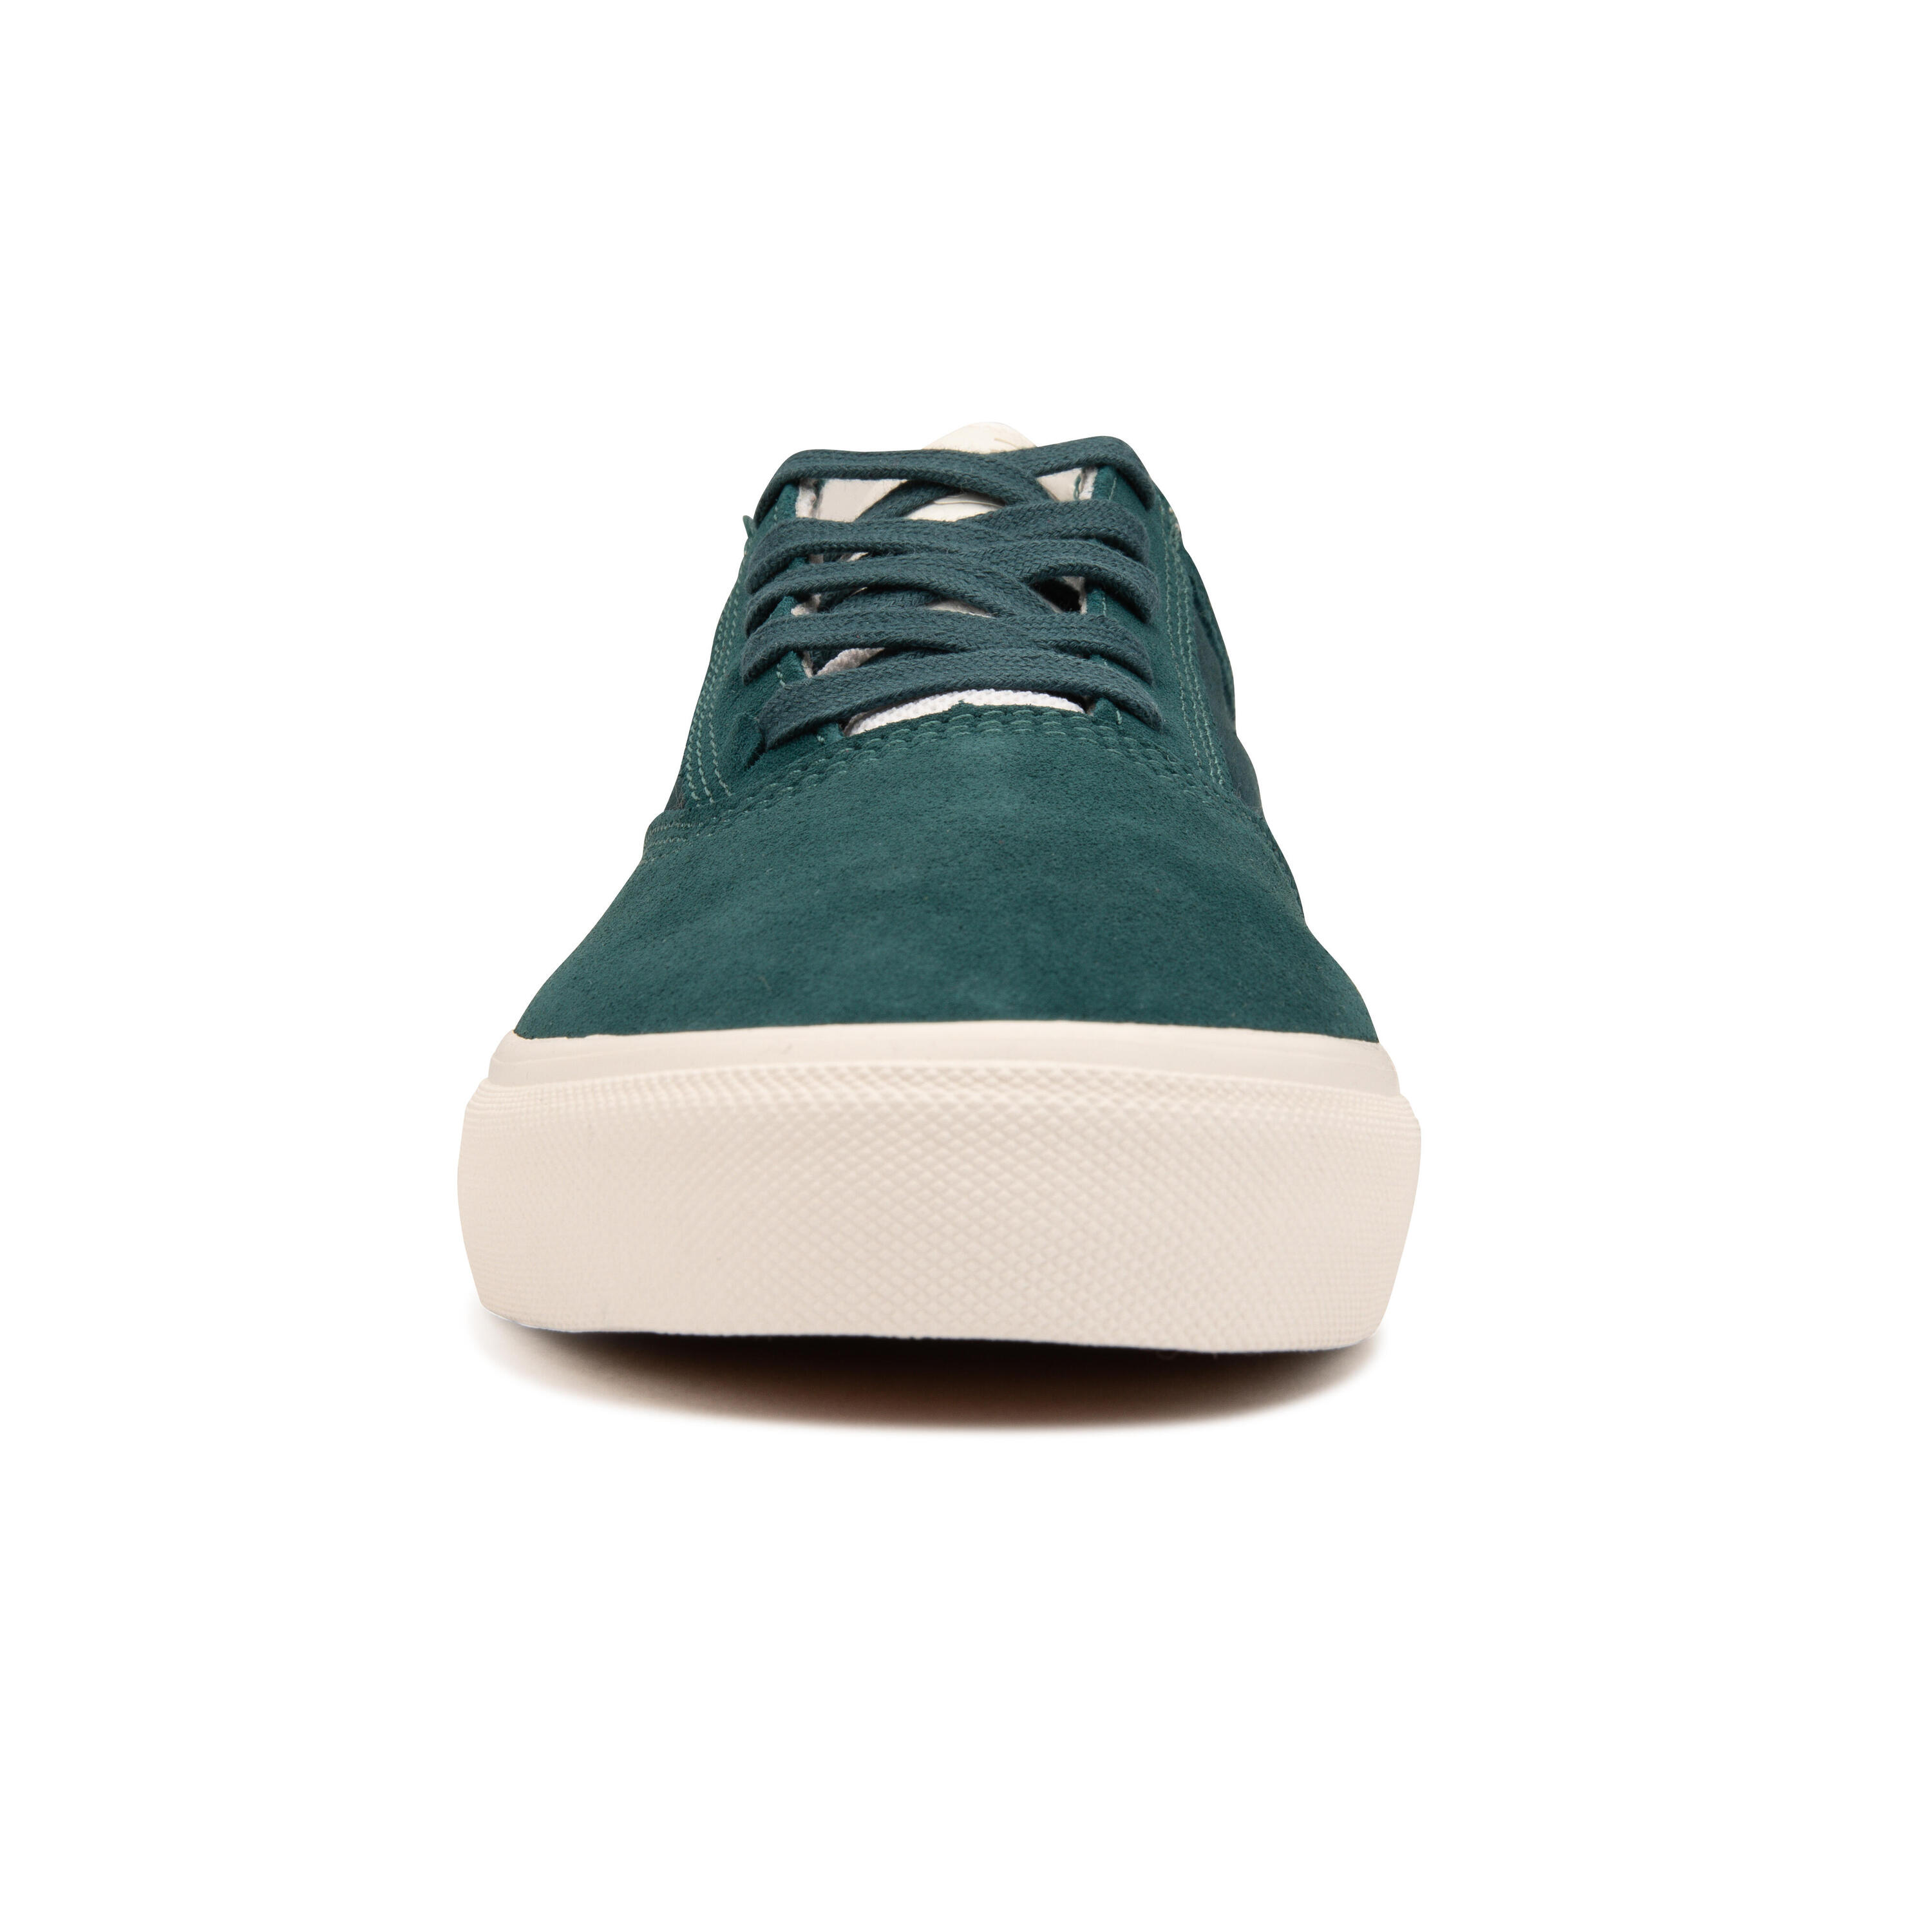 Adult Vulcanised Skate Shoes Vulca 500 II - Green/White 7/17